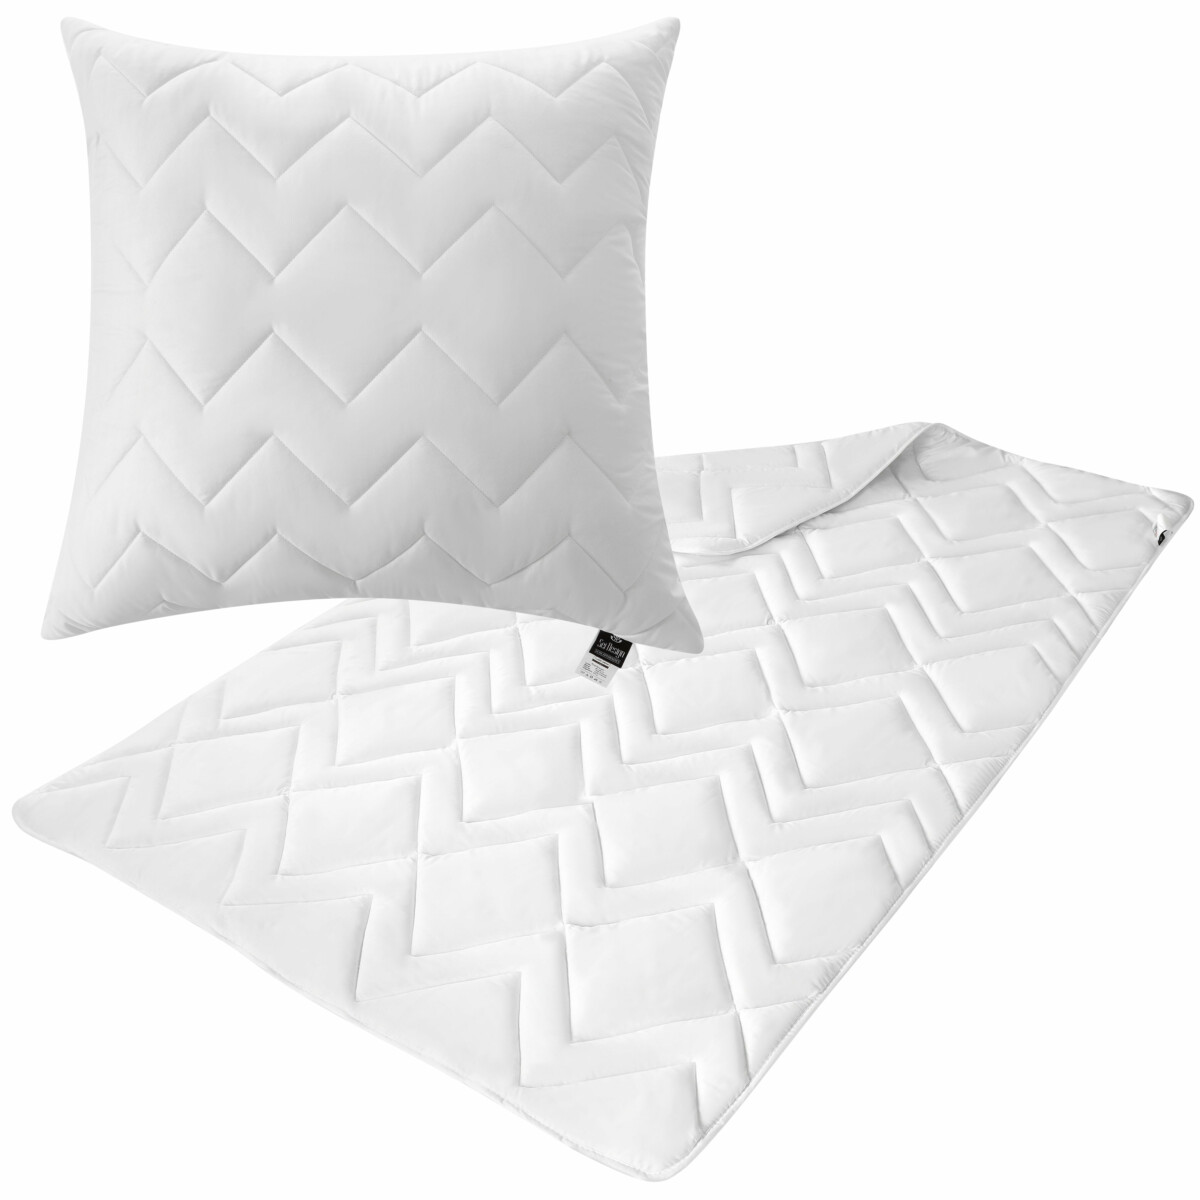 Bettdecken bestellen günstig - Sei Hochwertige Design, € 59,90